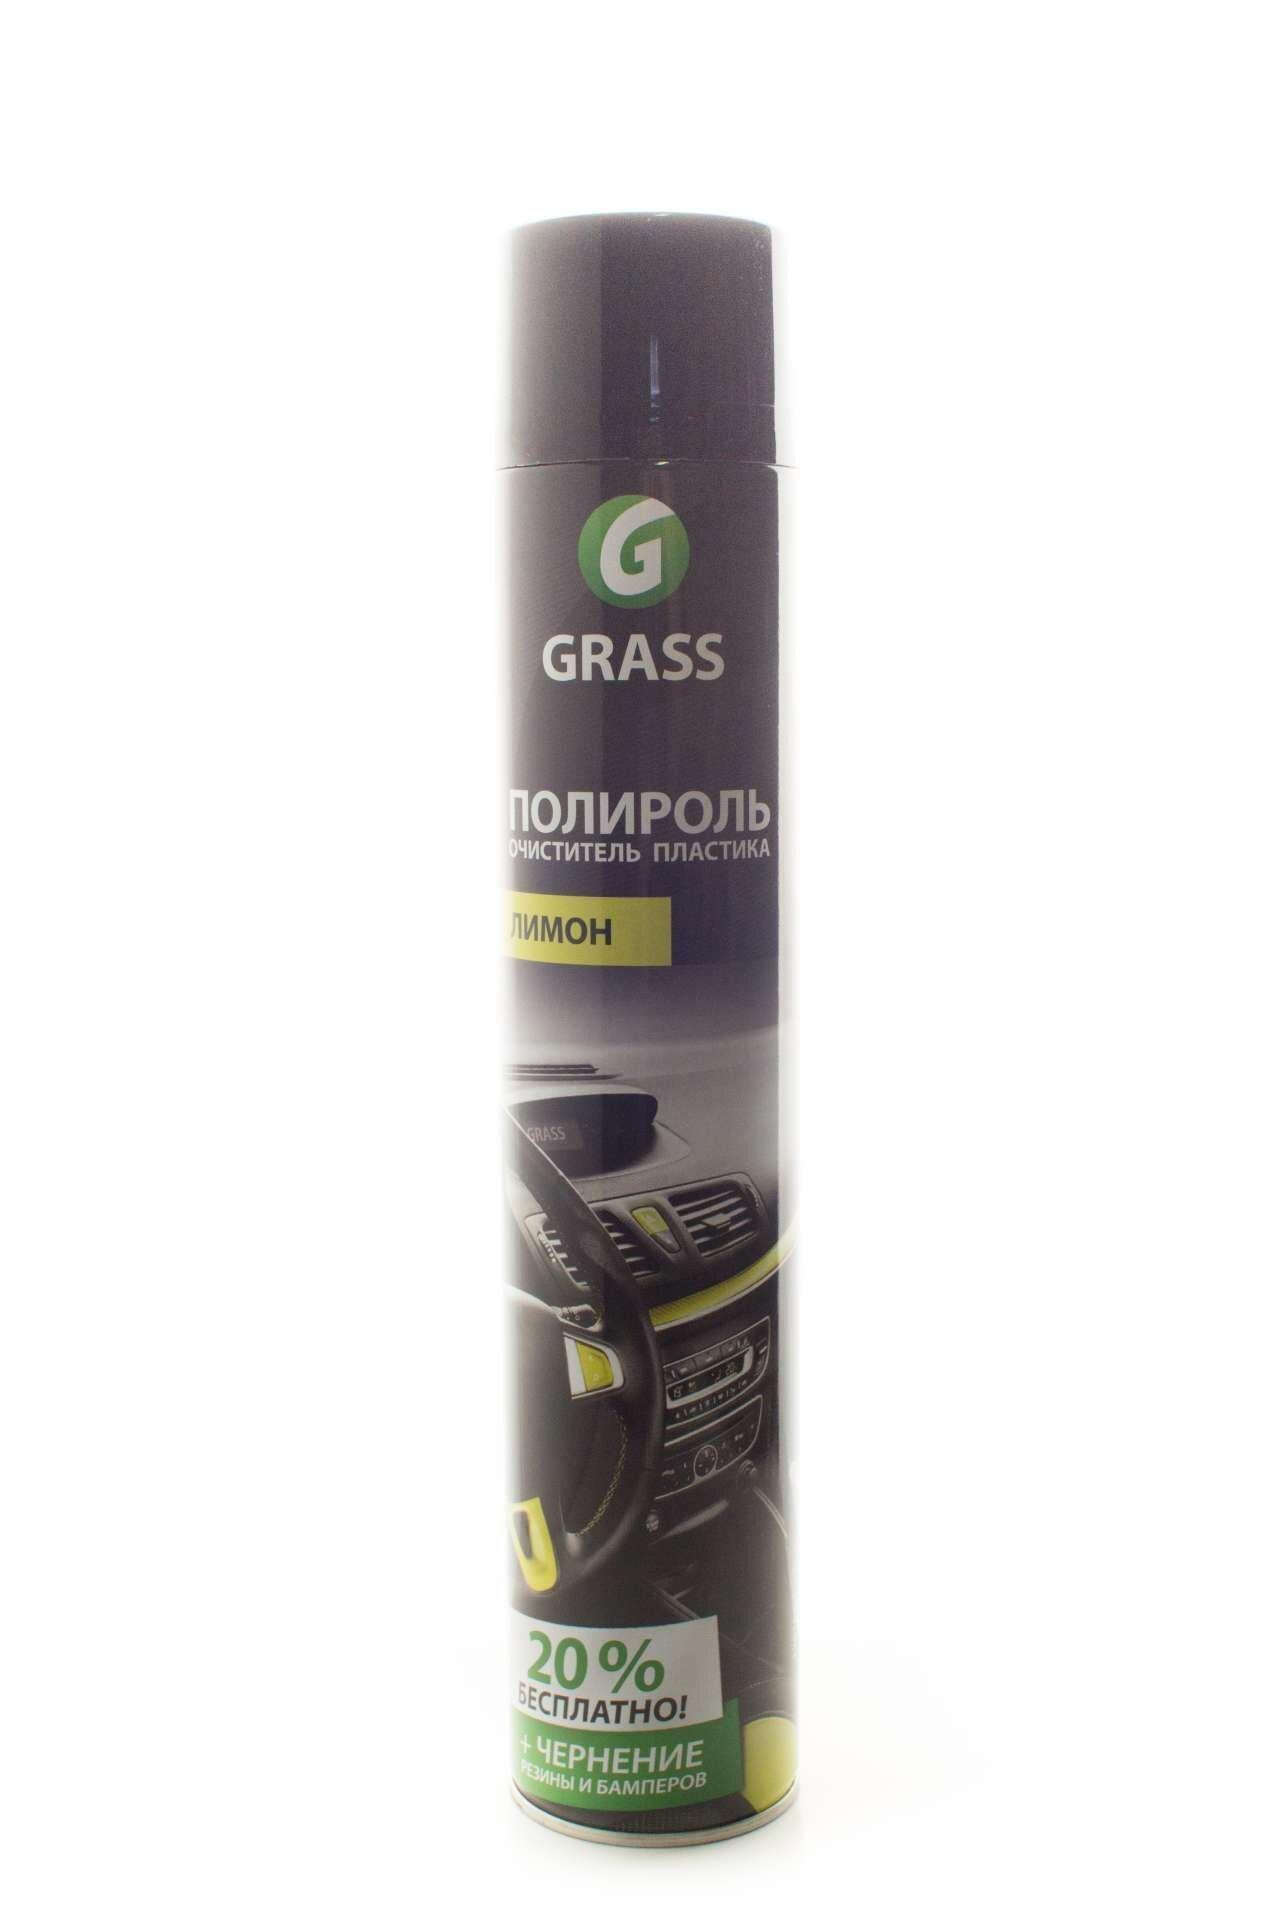 GRASS Полироль-очиститель пластика лимон 750мл